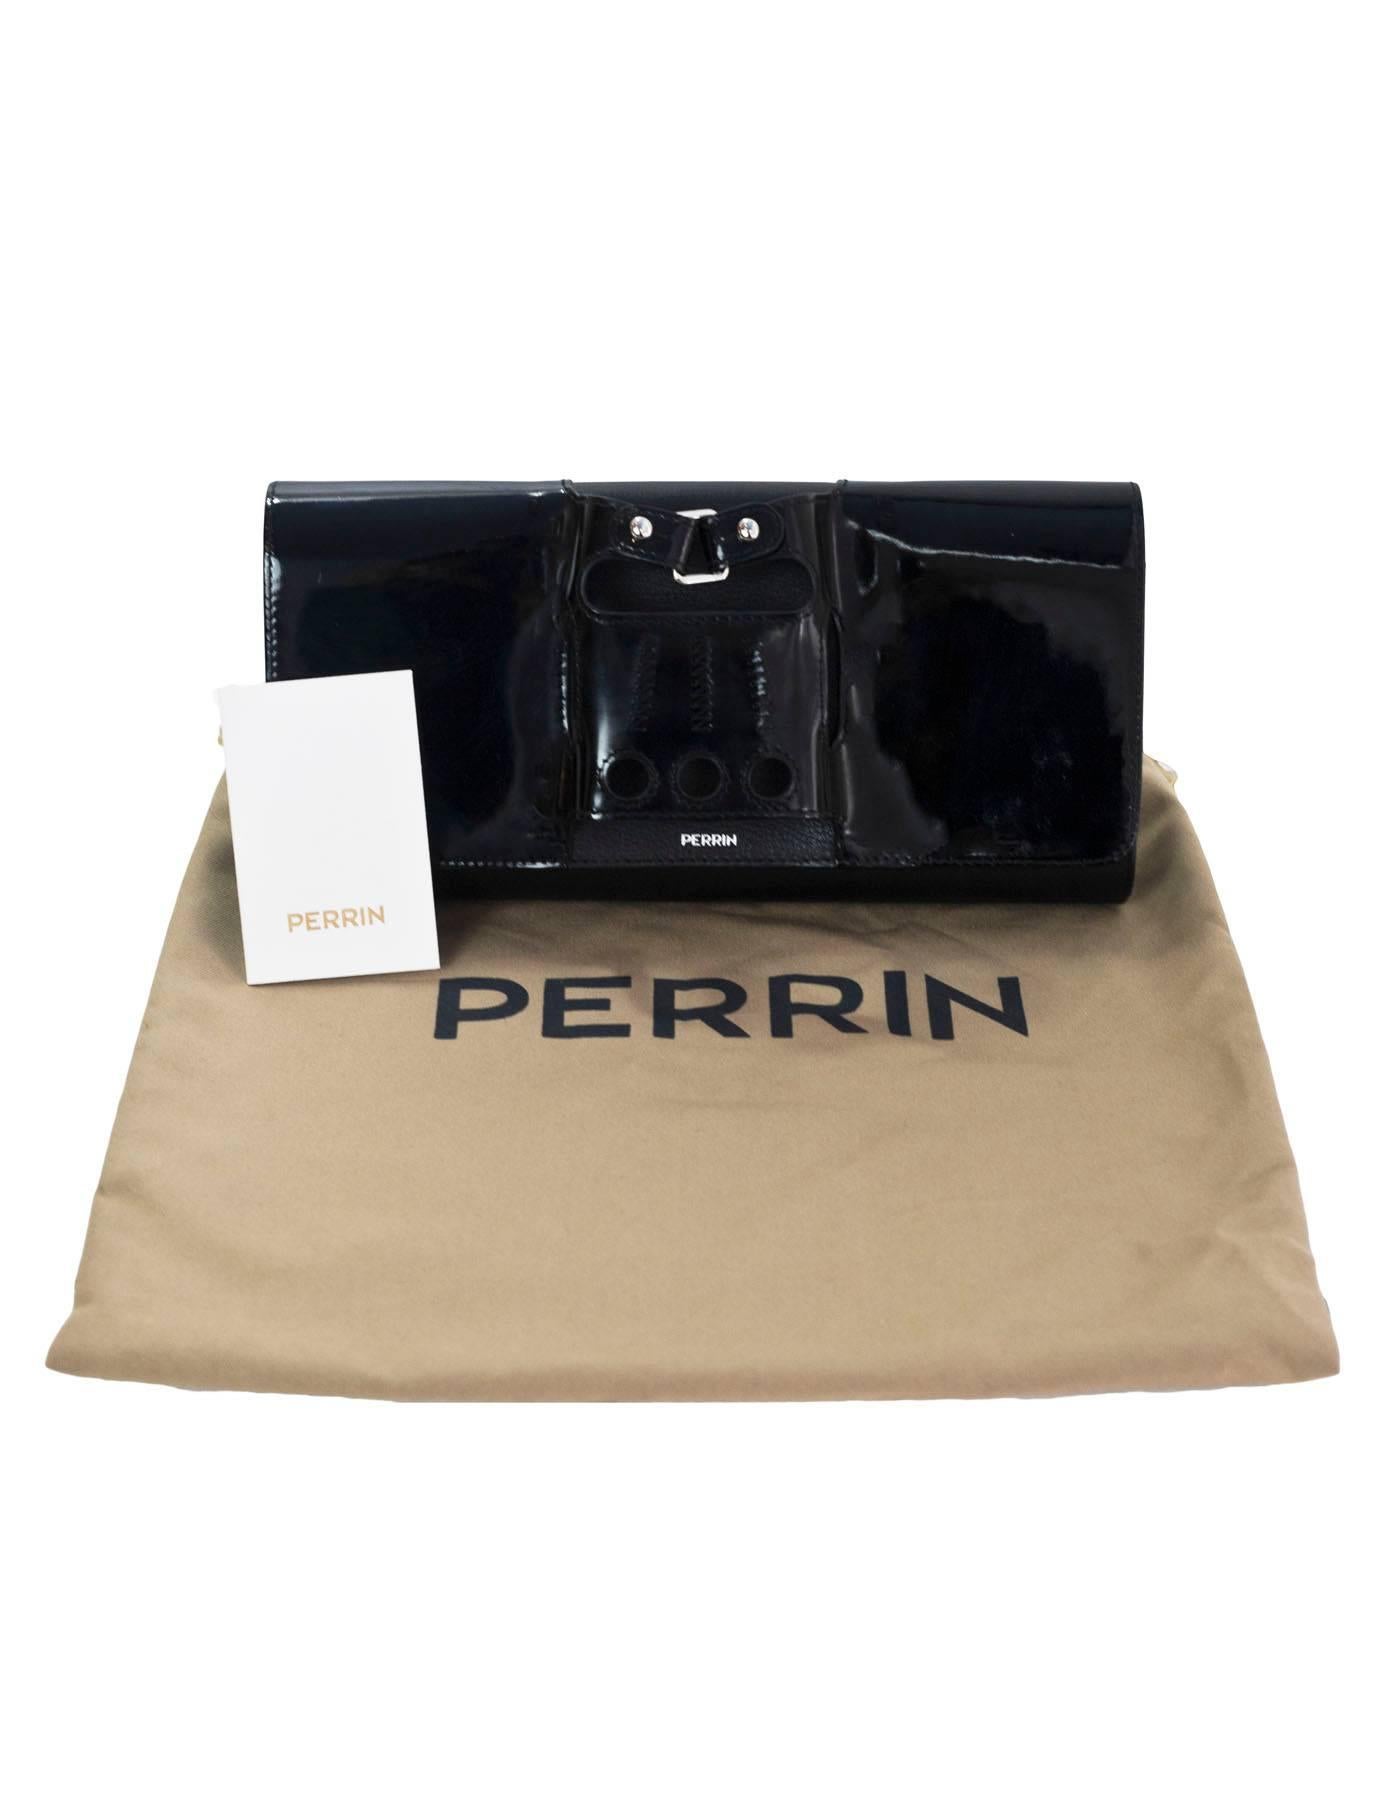 Perrin Black Patent & Calf Leather Le Cabriolet Glove Clutch Bag  6